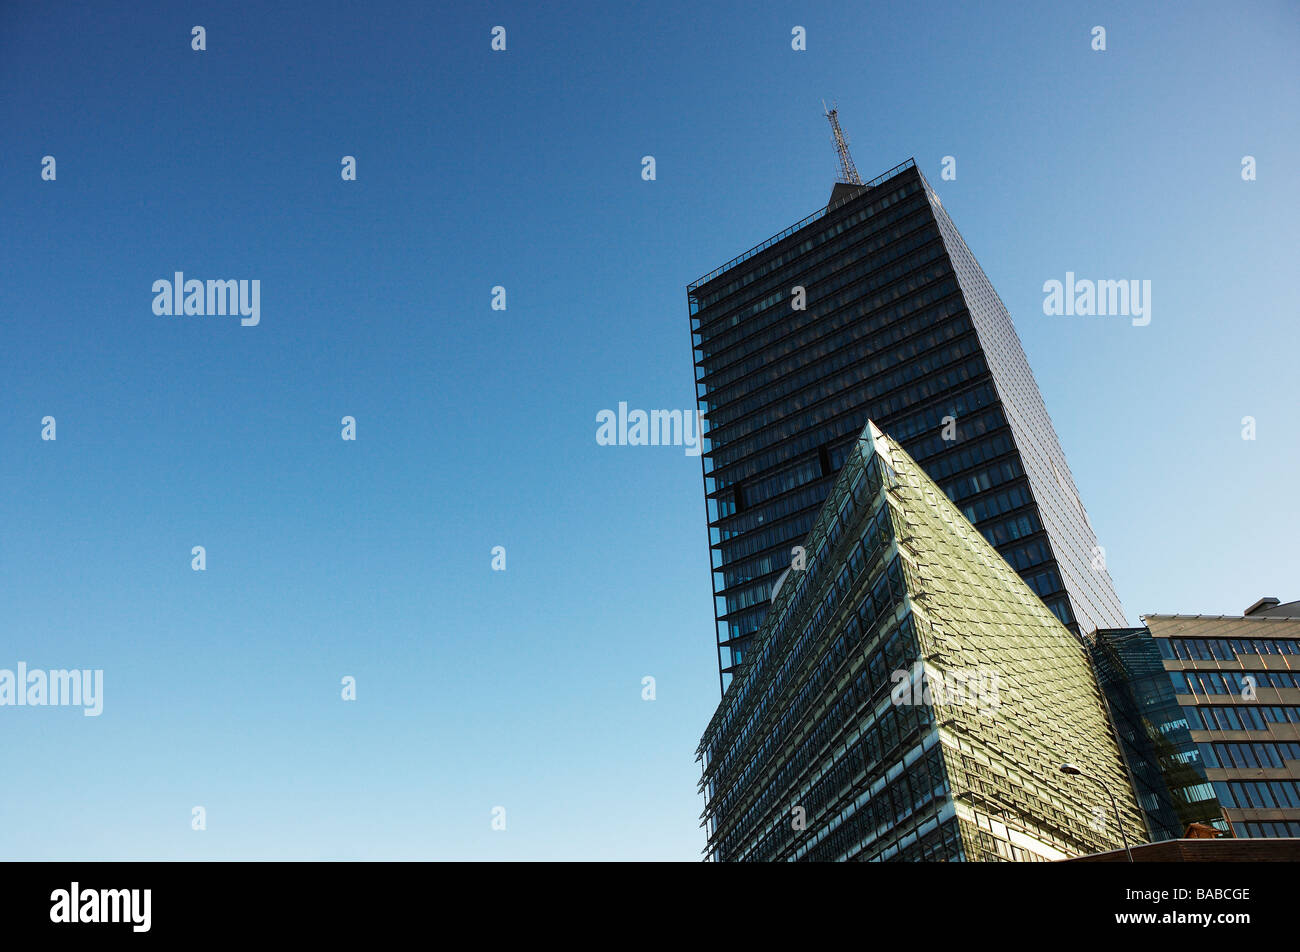 Kista science tower Stockholm Sweden Stock Photo - Alamy